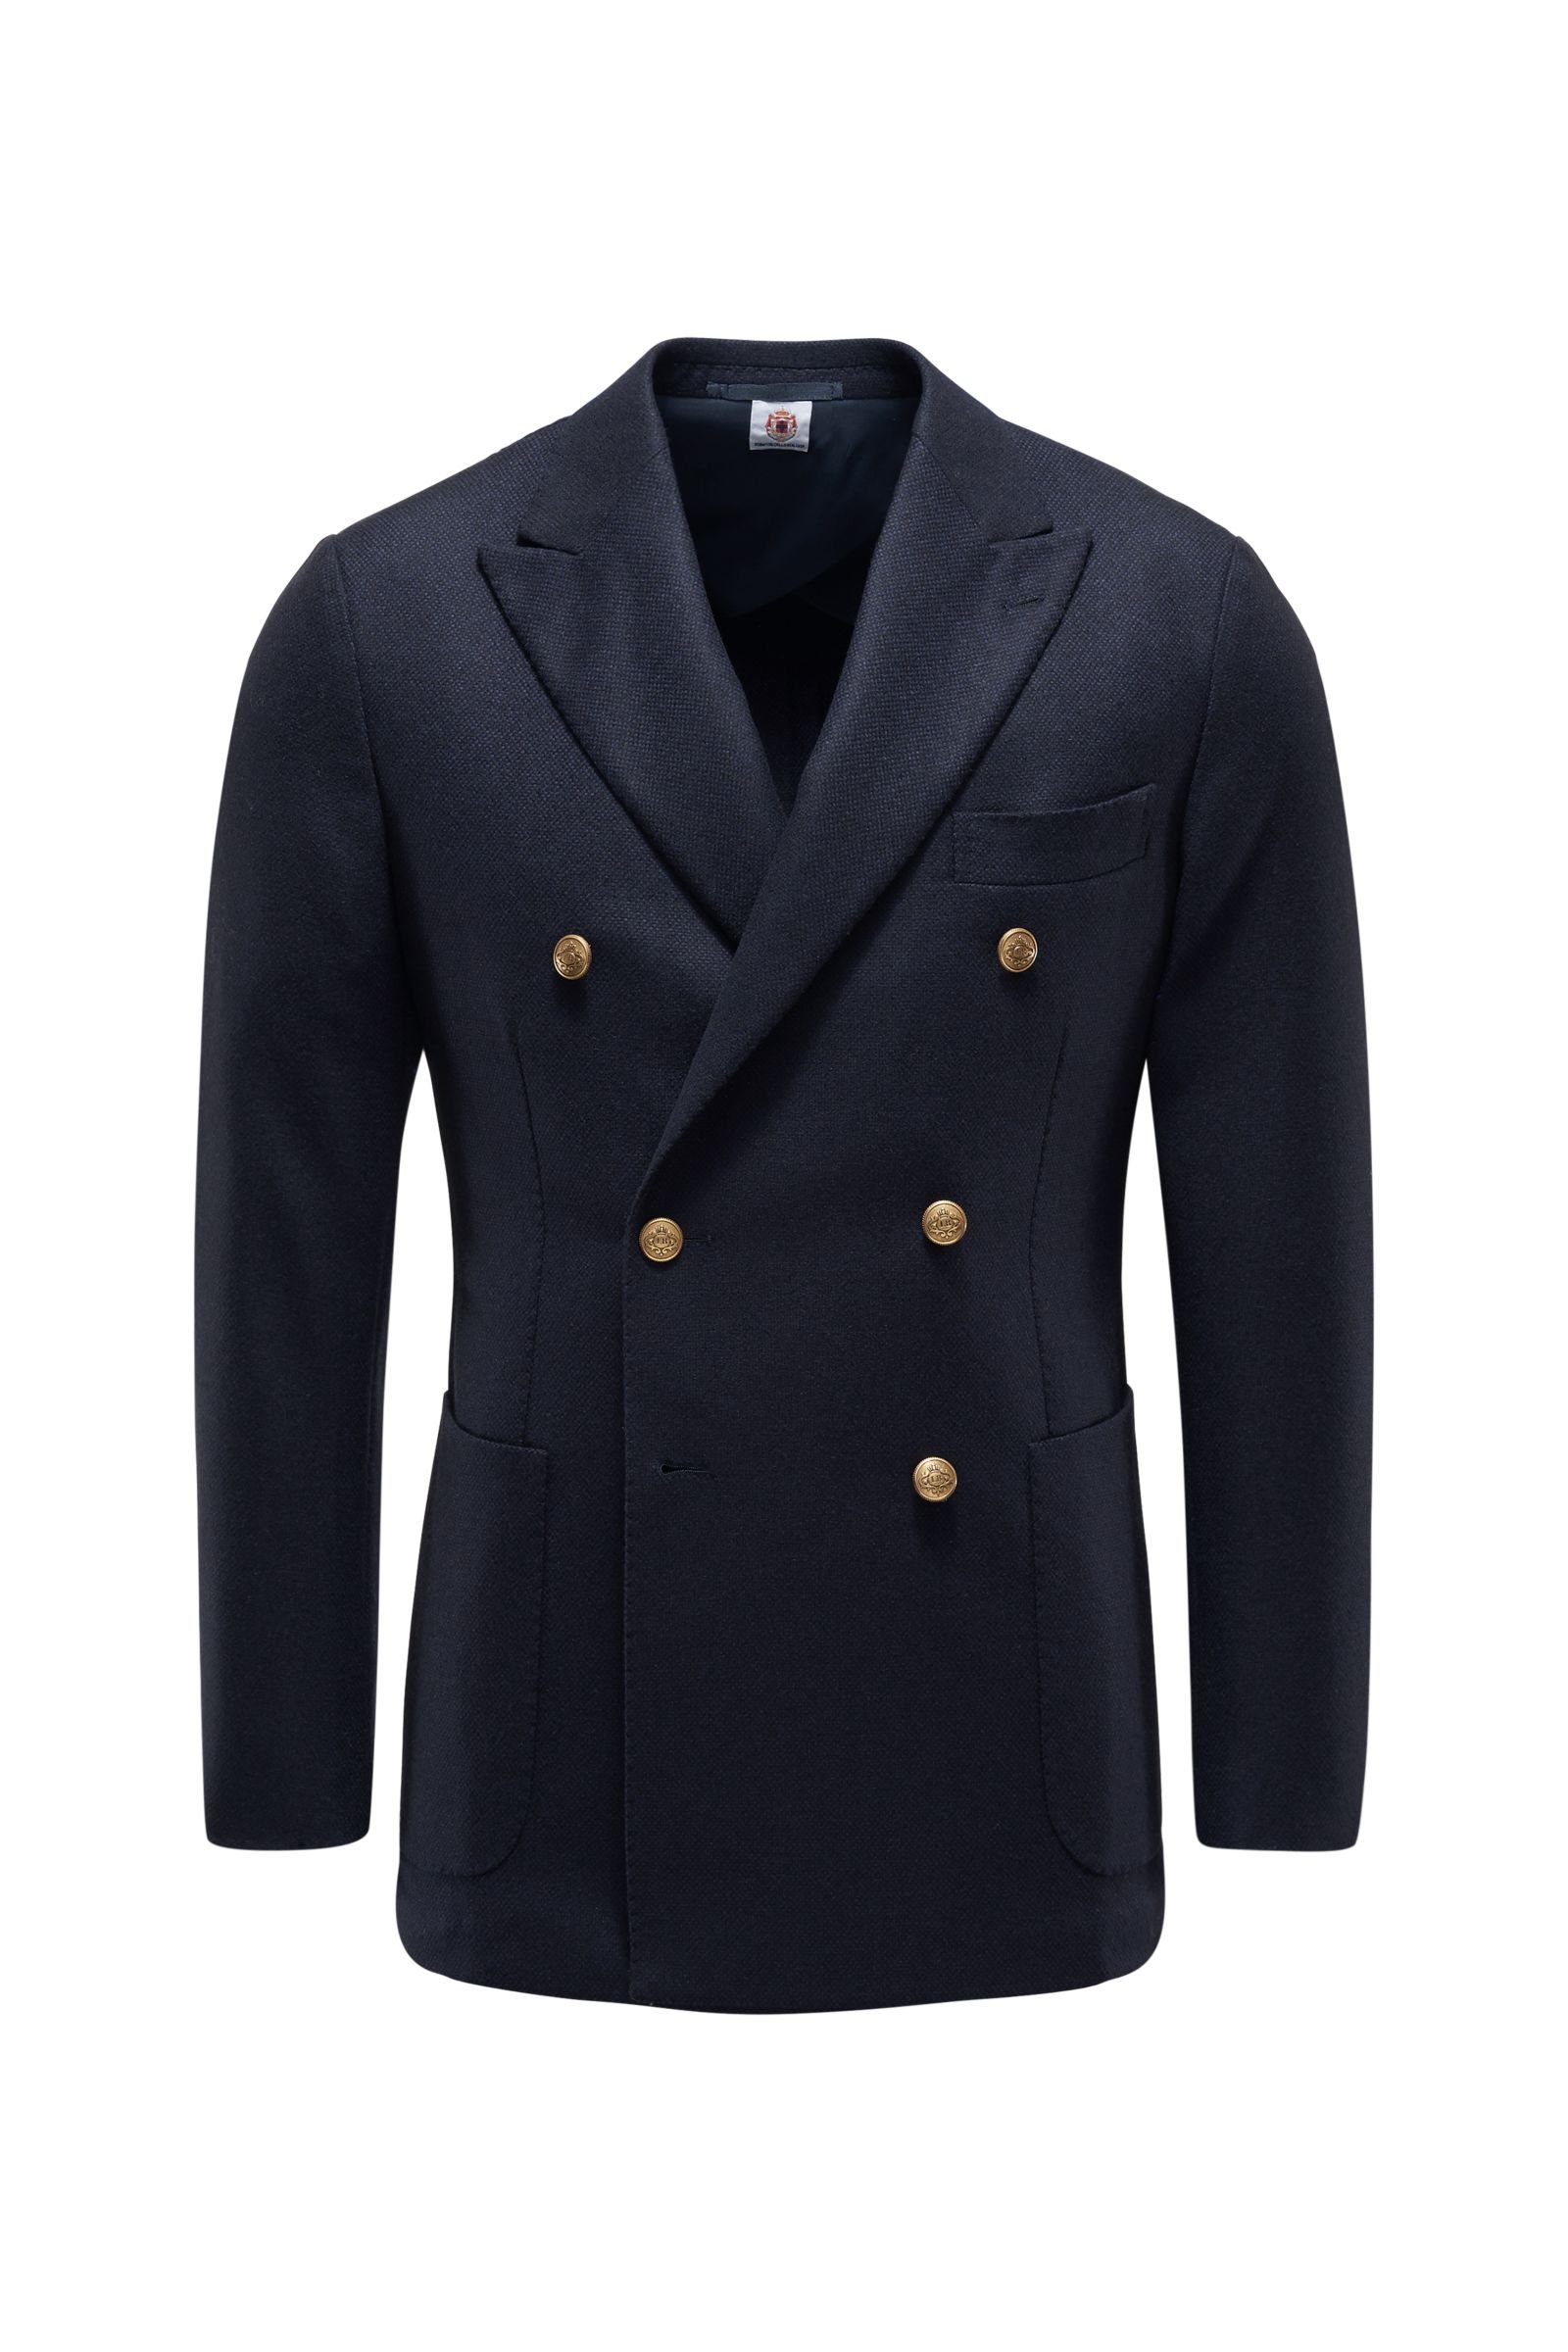 Cashmere smart-casual jacket 'Sorrento' navy